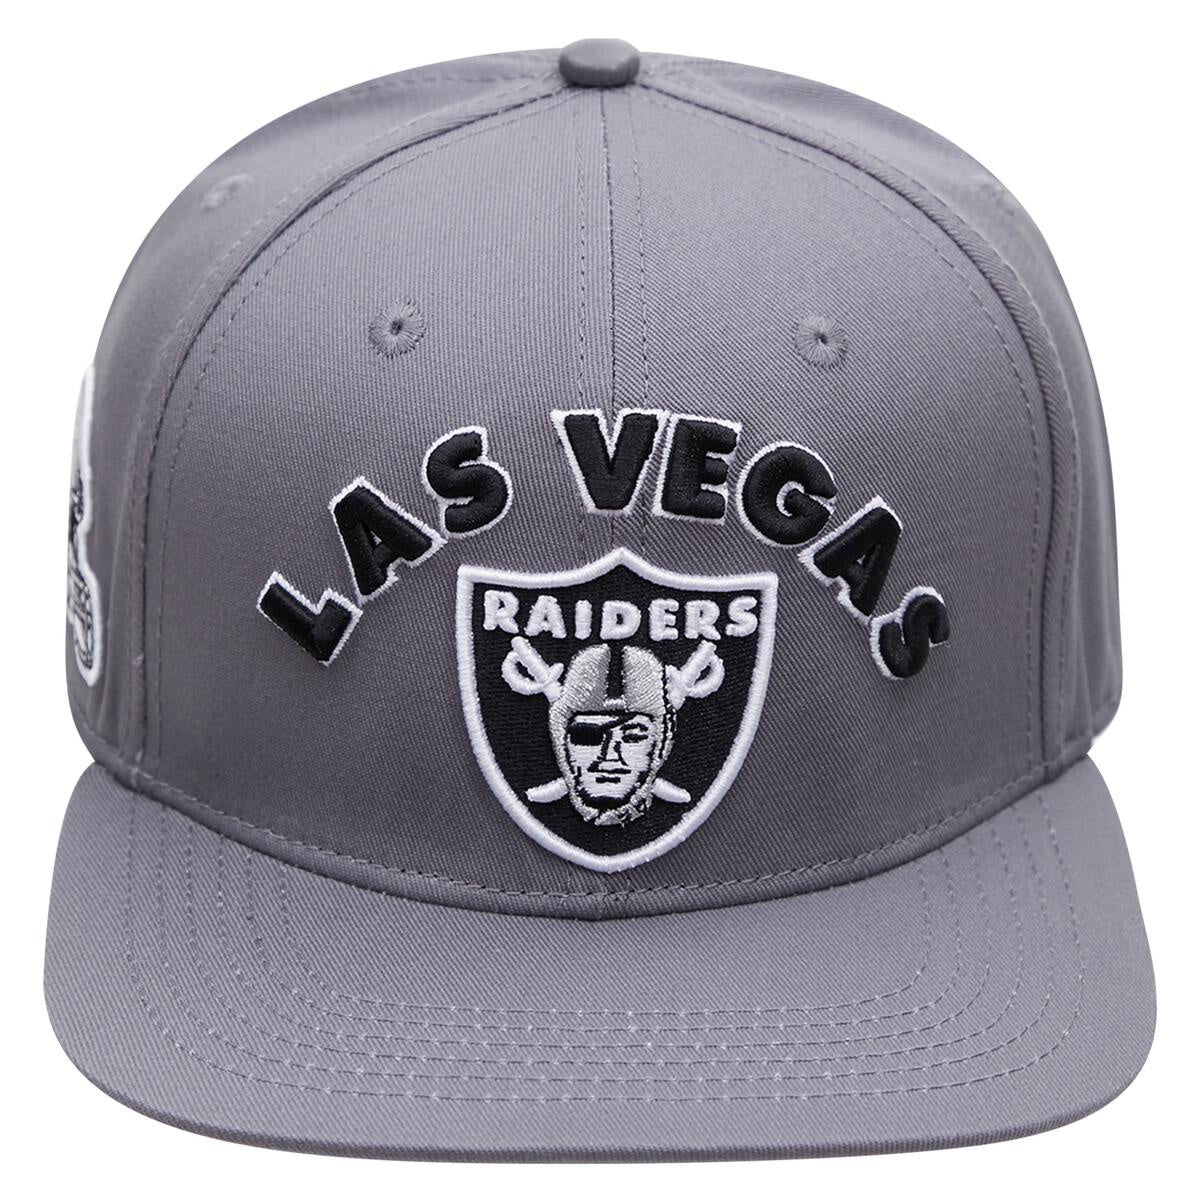 Pro Standard, Accessories, Pro Standard Baby Blue Pink Las Vegas Raiders  Snapback Hat